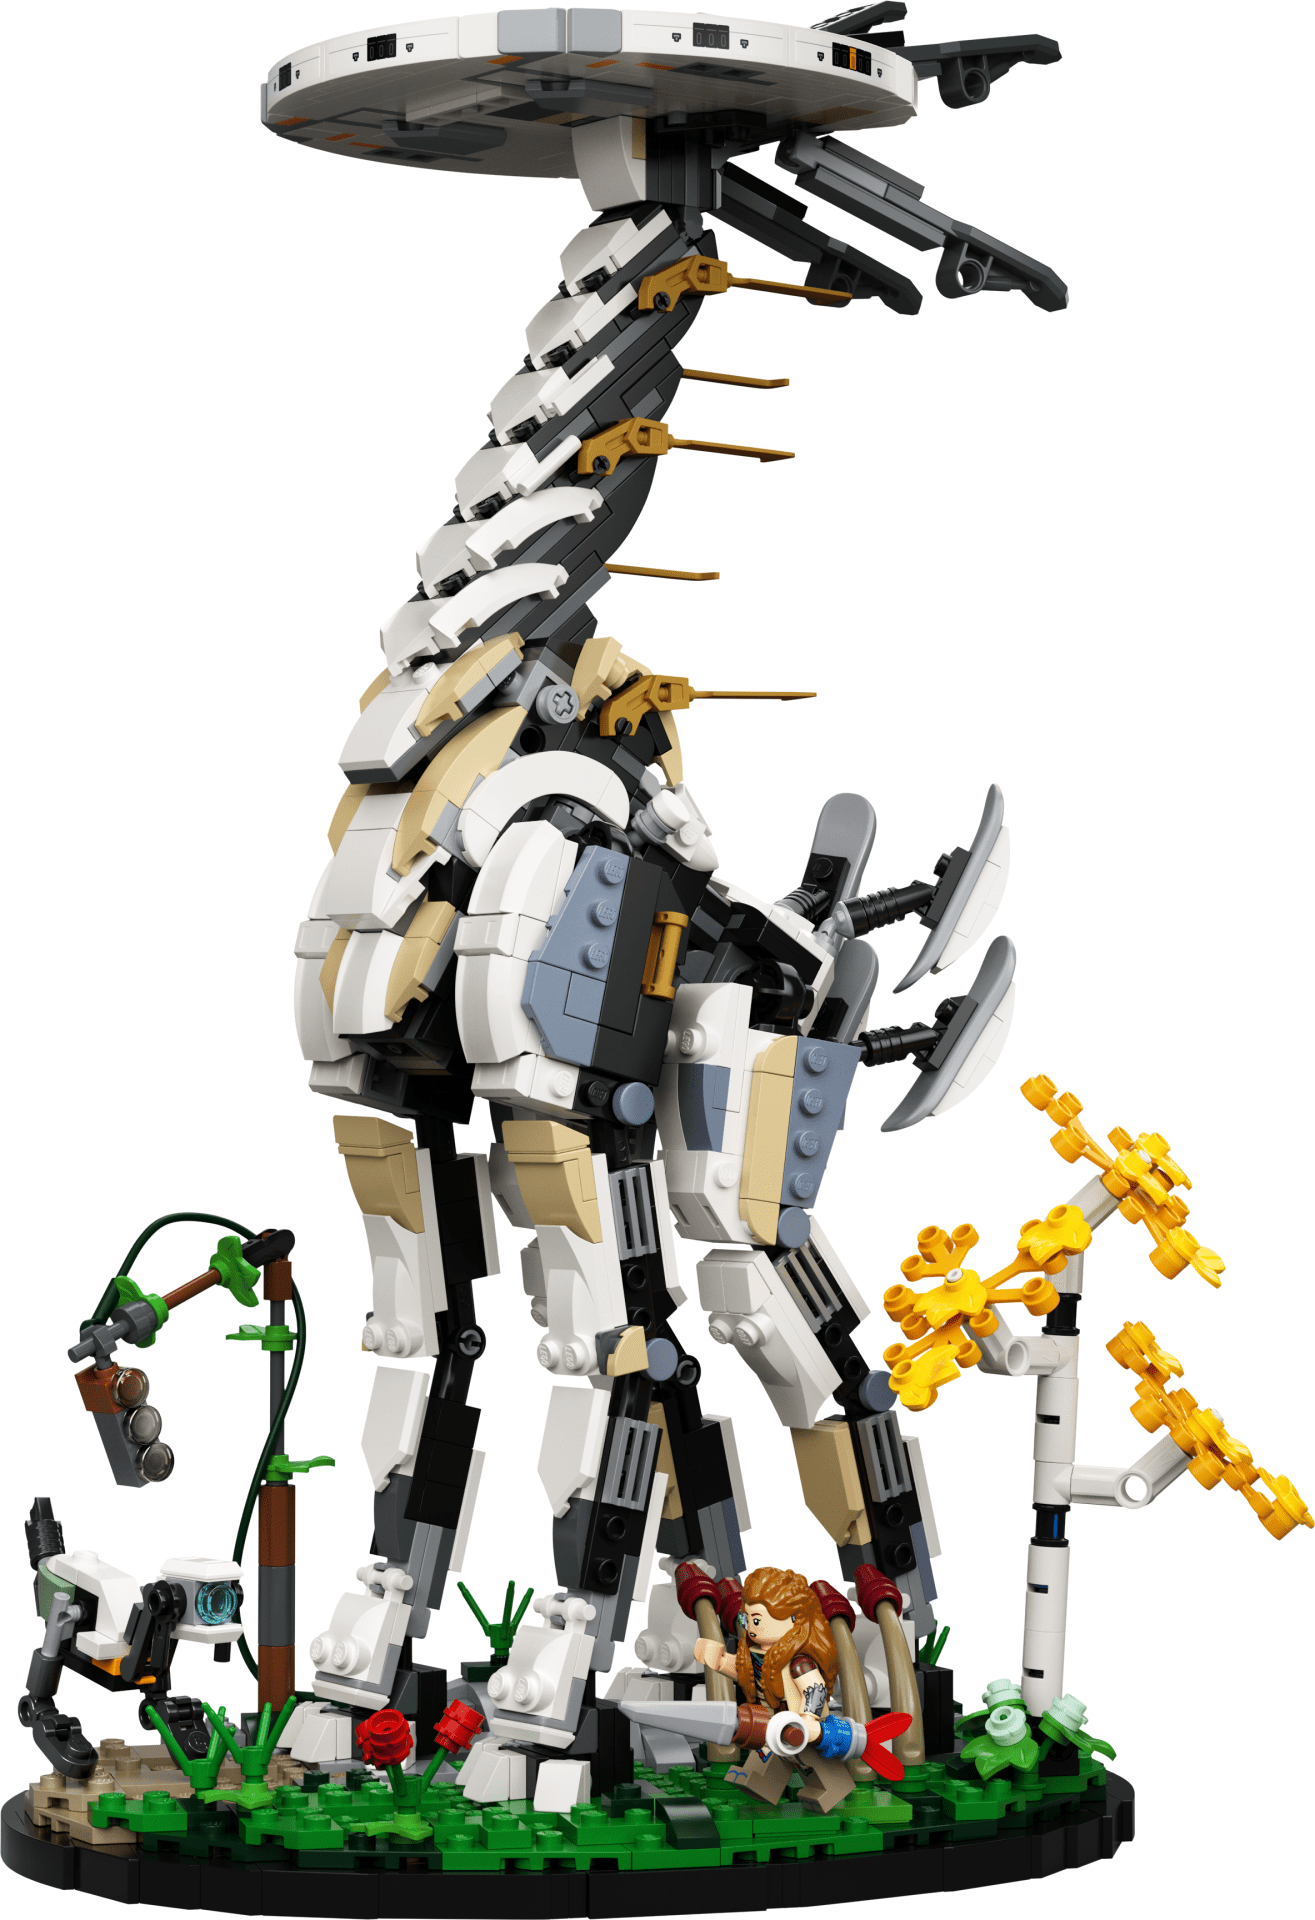 LEGO Horizon Forbidden West: here is the new set "Collolungo"